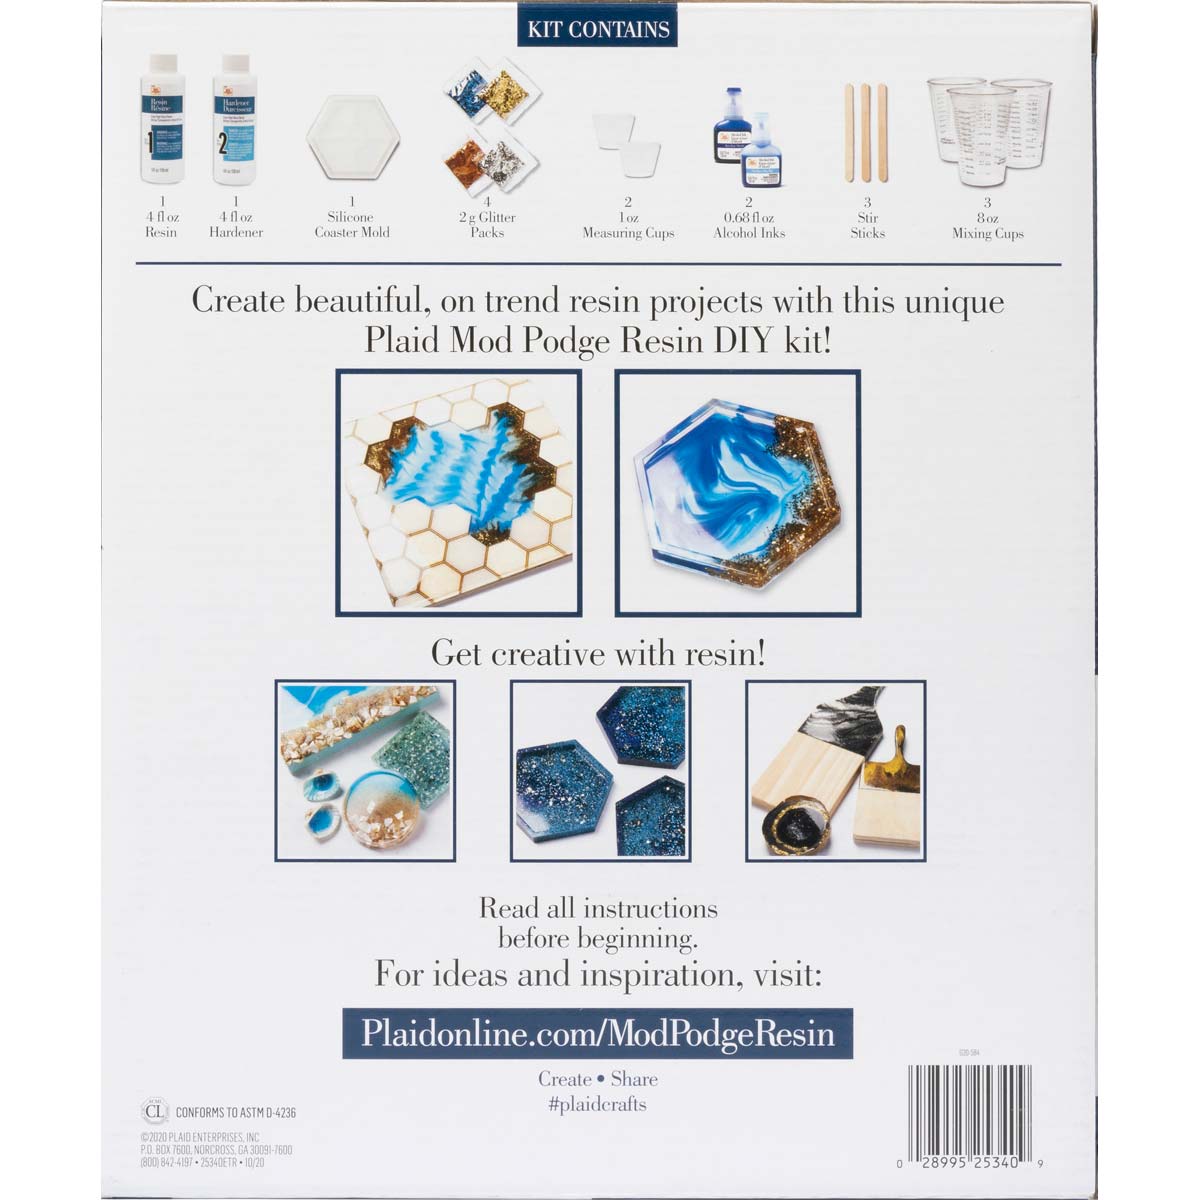 Mod Podge ® Do-It-Yourself Resin Kit - Honeycomb - 25340E